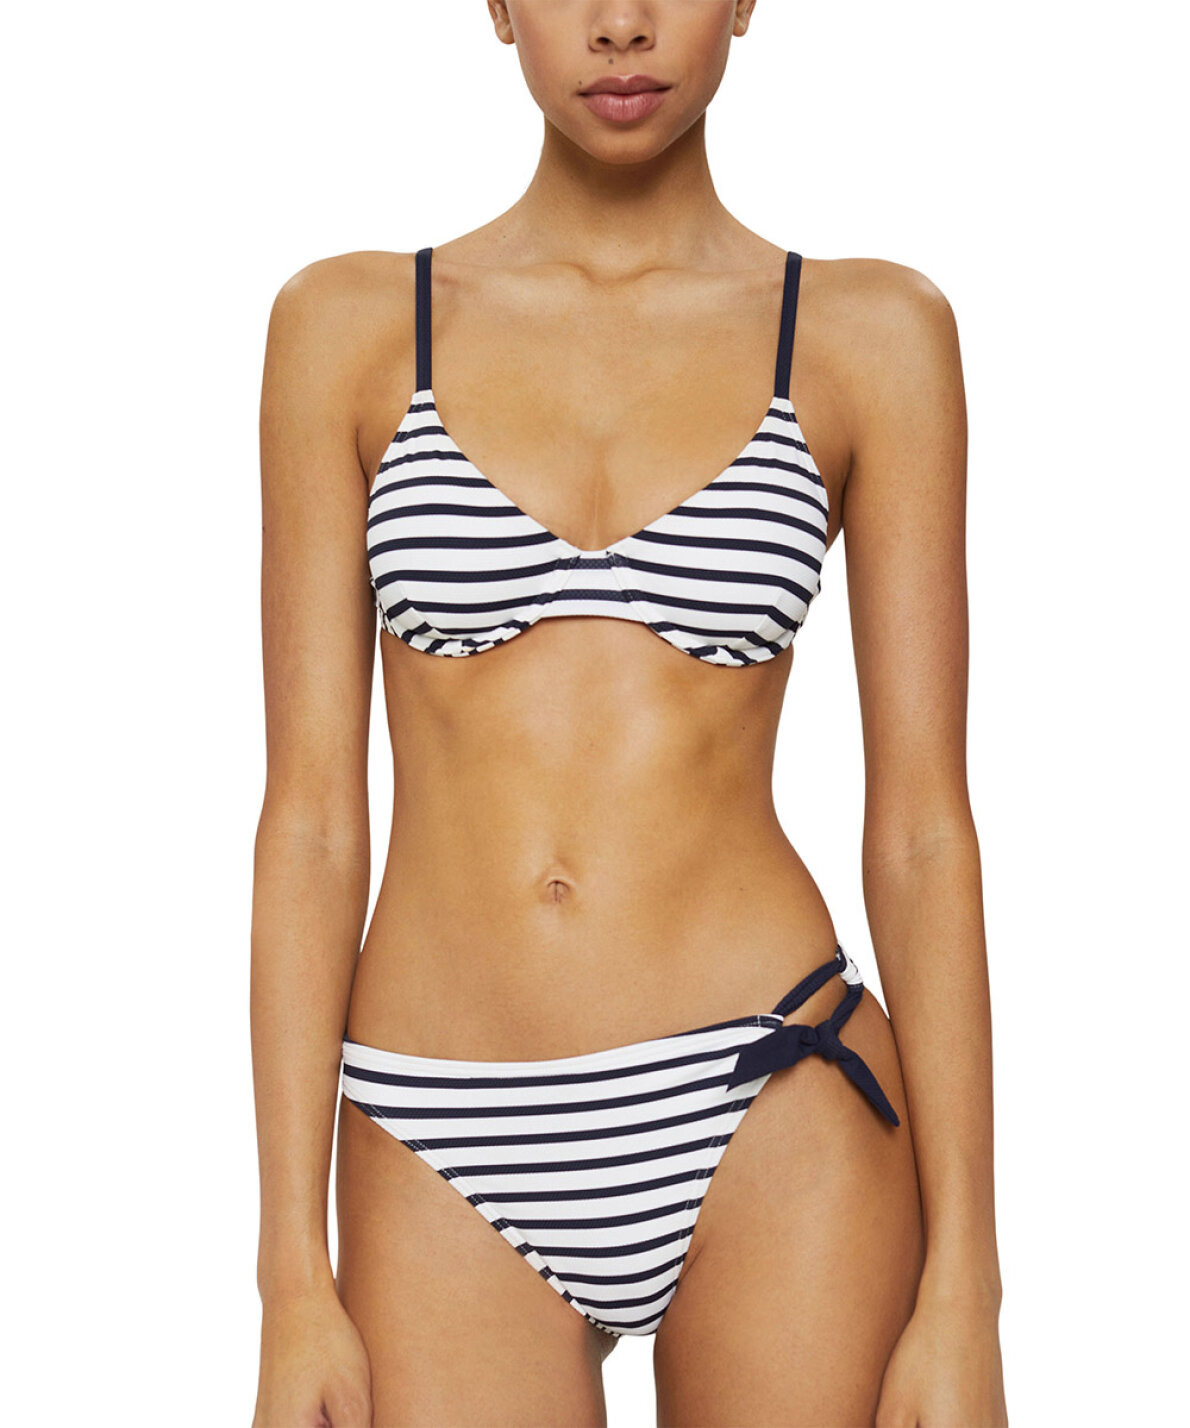 Pengeudlån Skælde ud Industriel Wunderwear - Hamptons Beach Bikini top fra Esprit